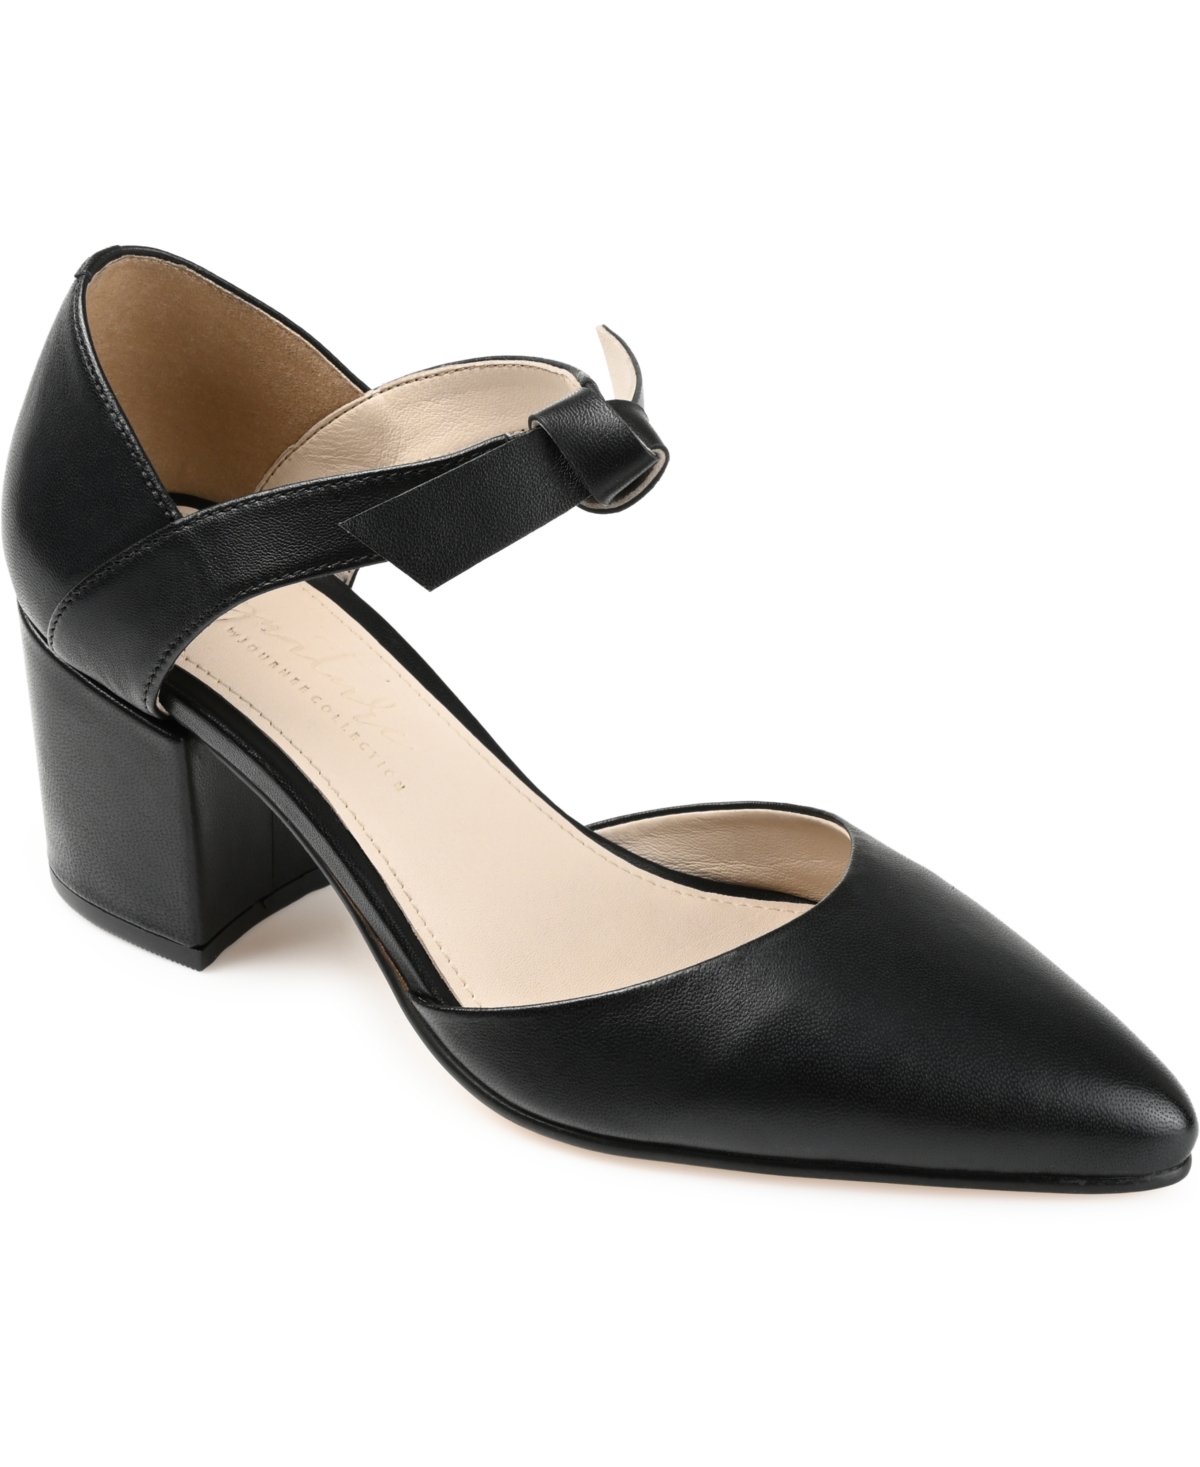 Women's Camille Pointed Toe Block Heel Pumps - Black